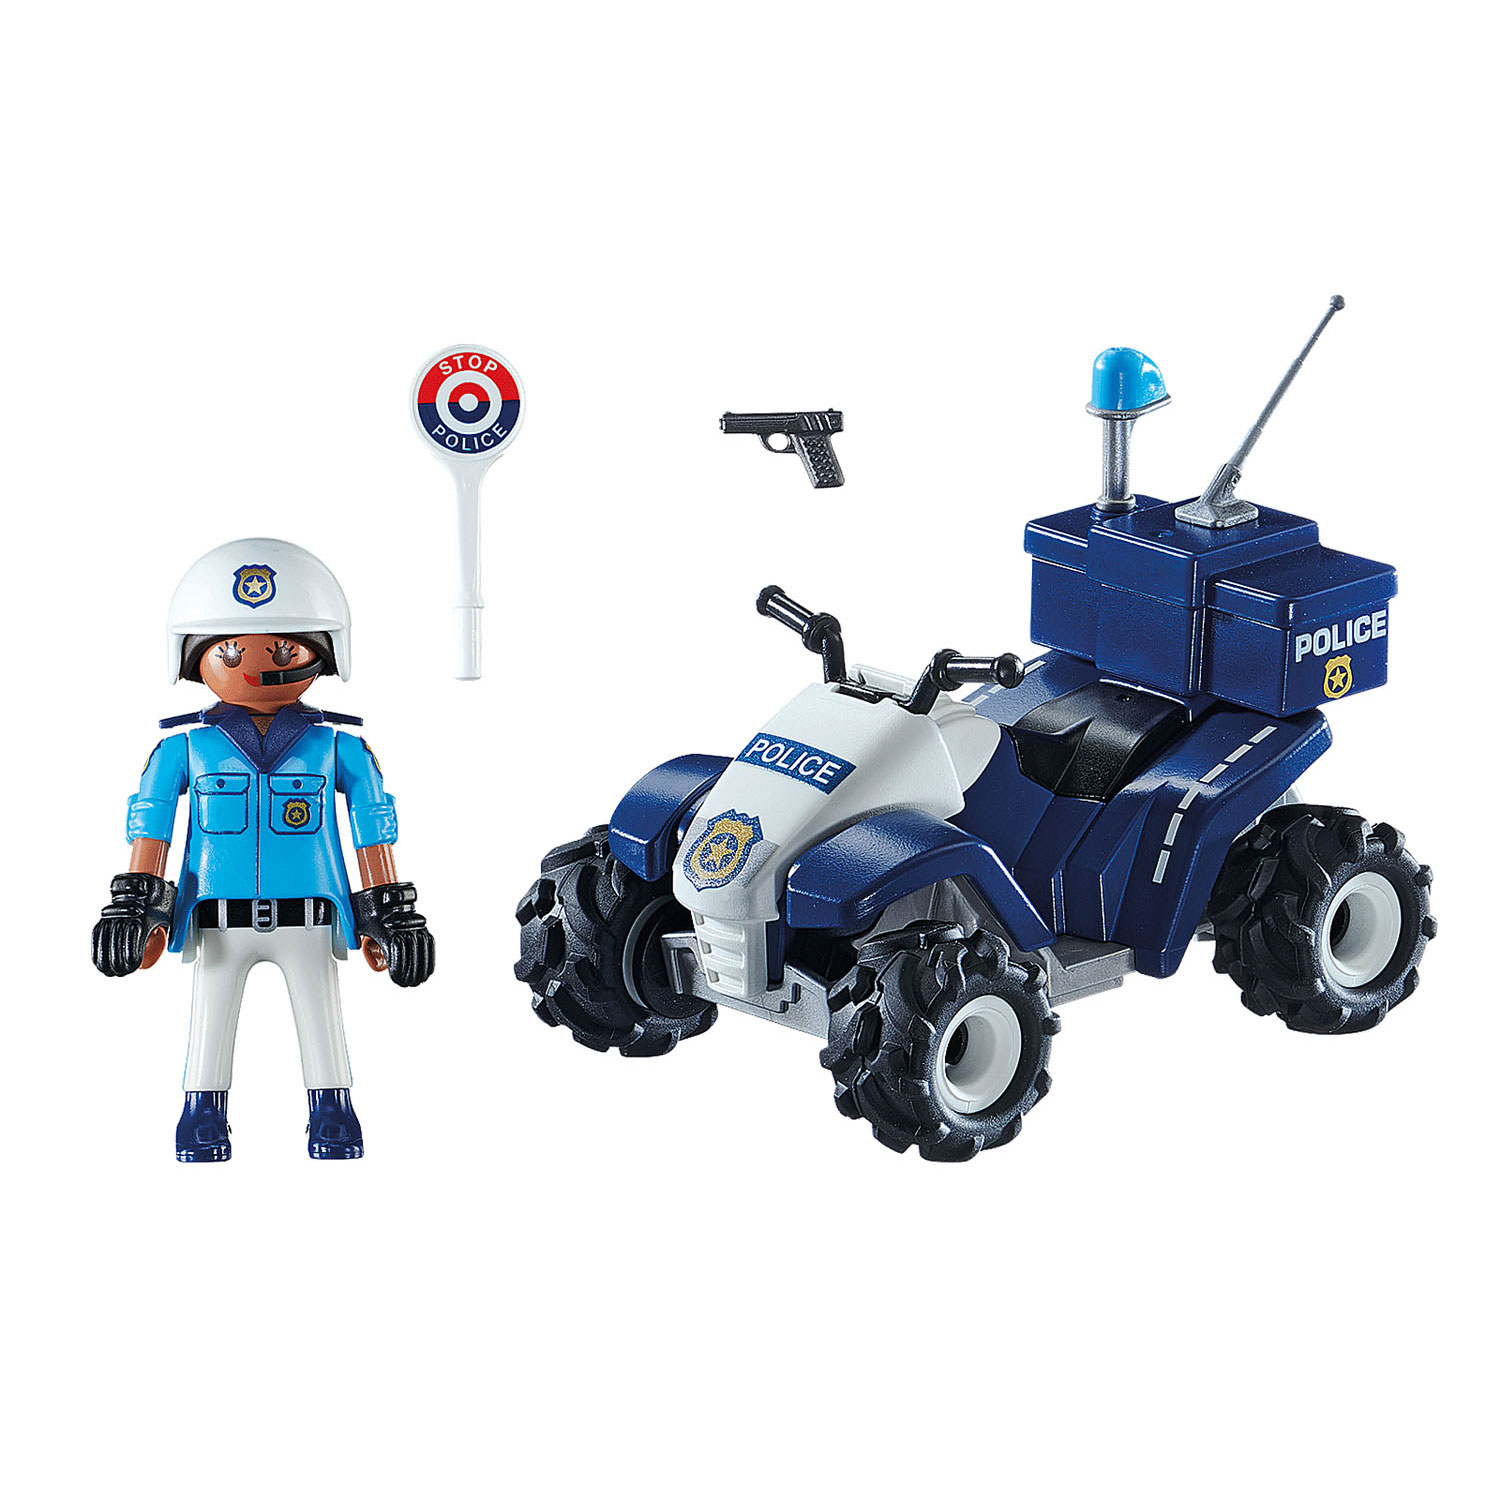 Playmobil City Action Politie Speed Quad - 71092